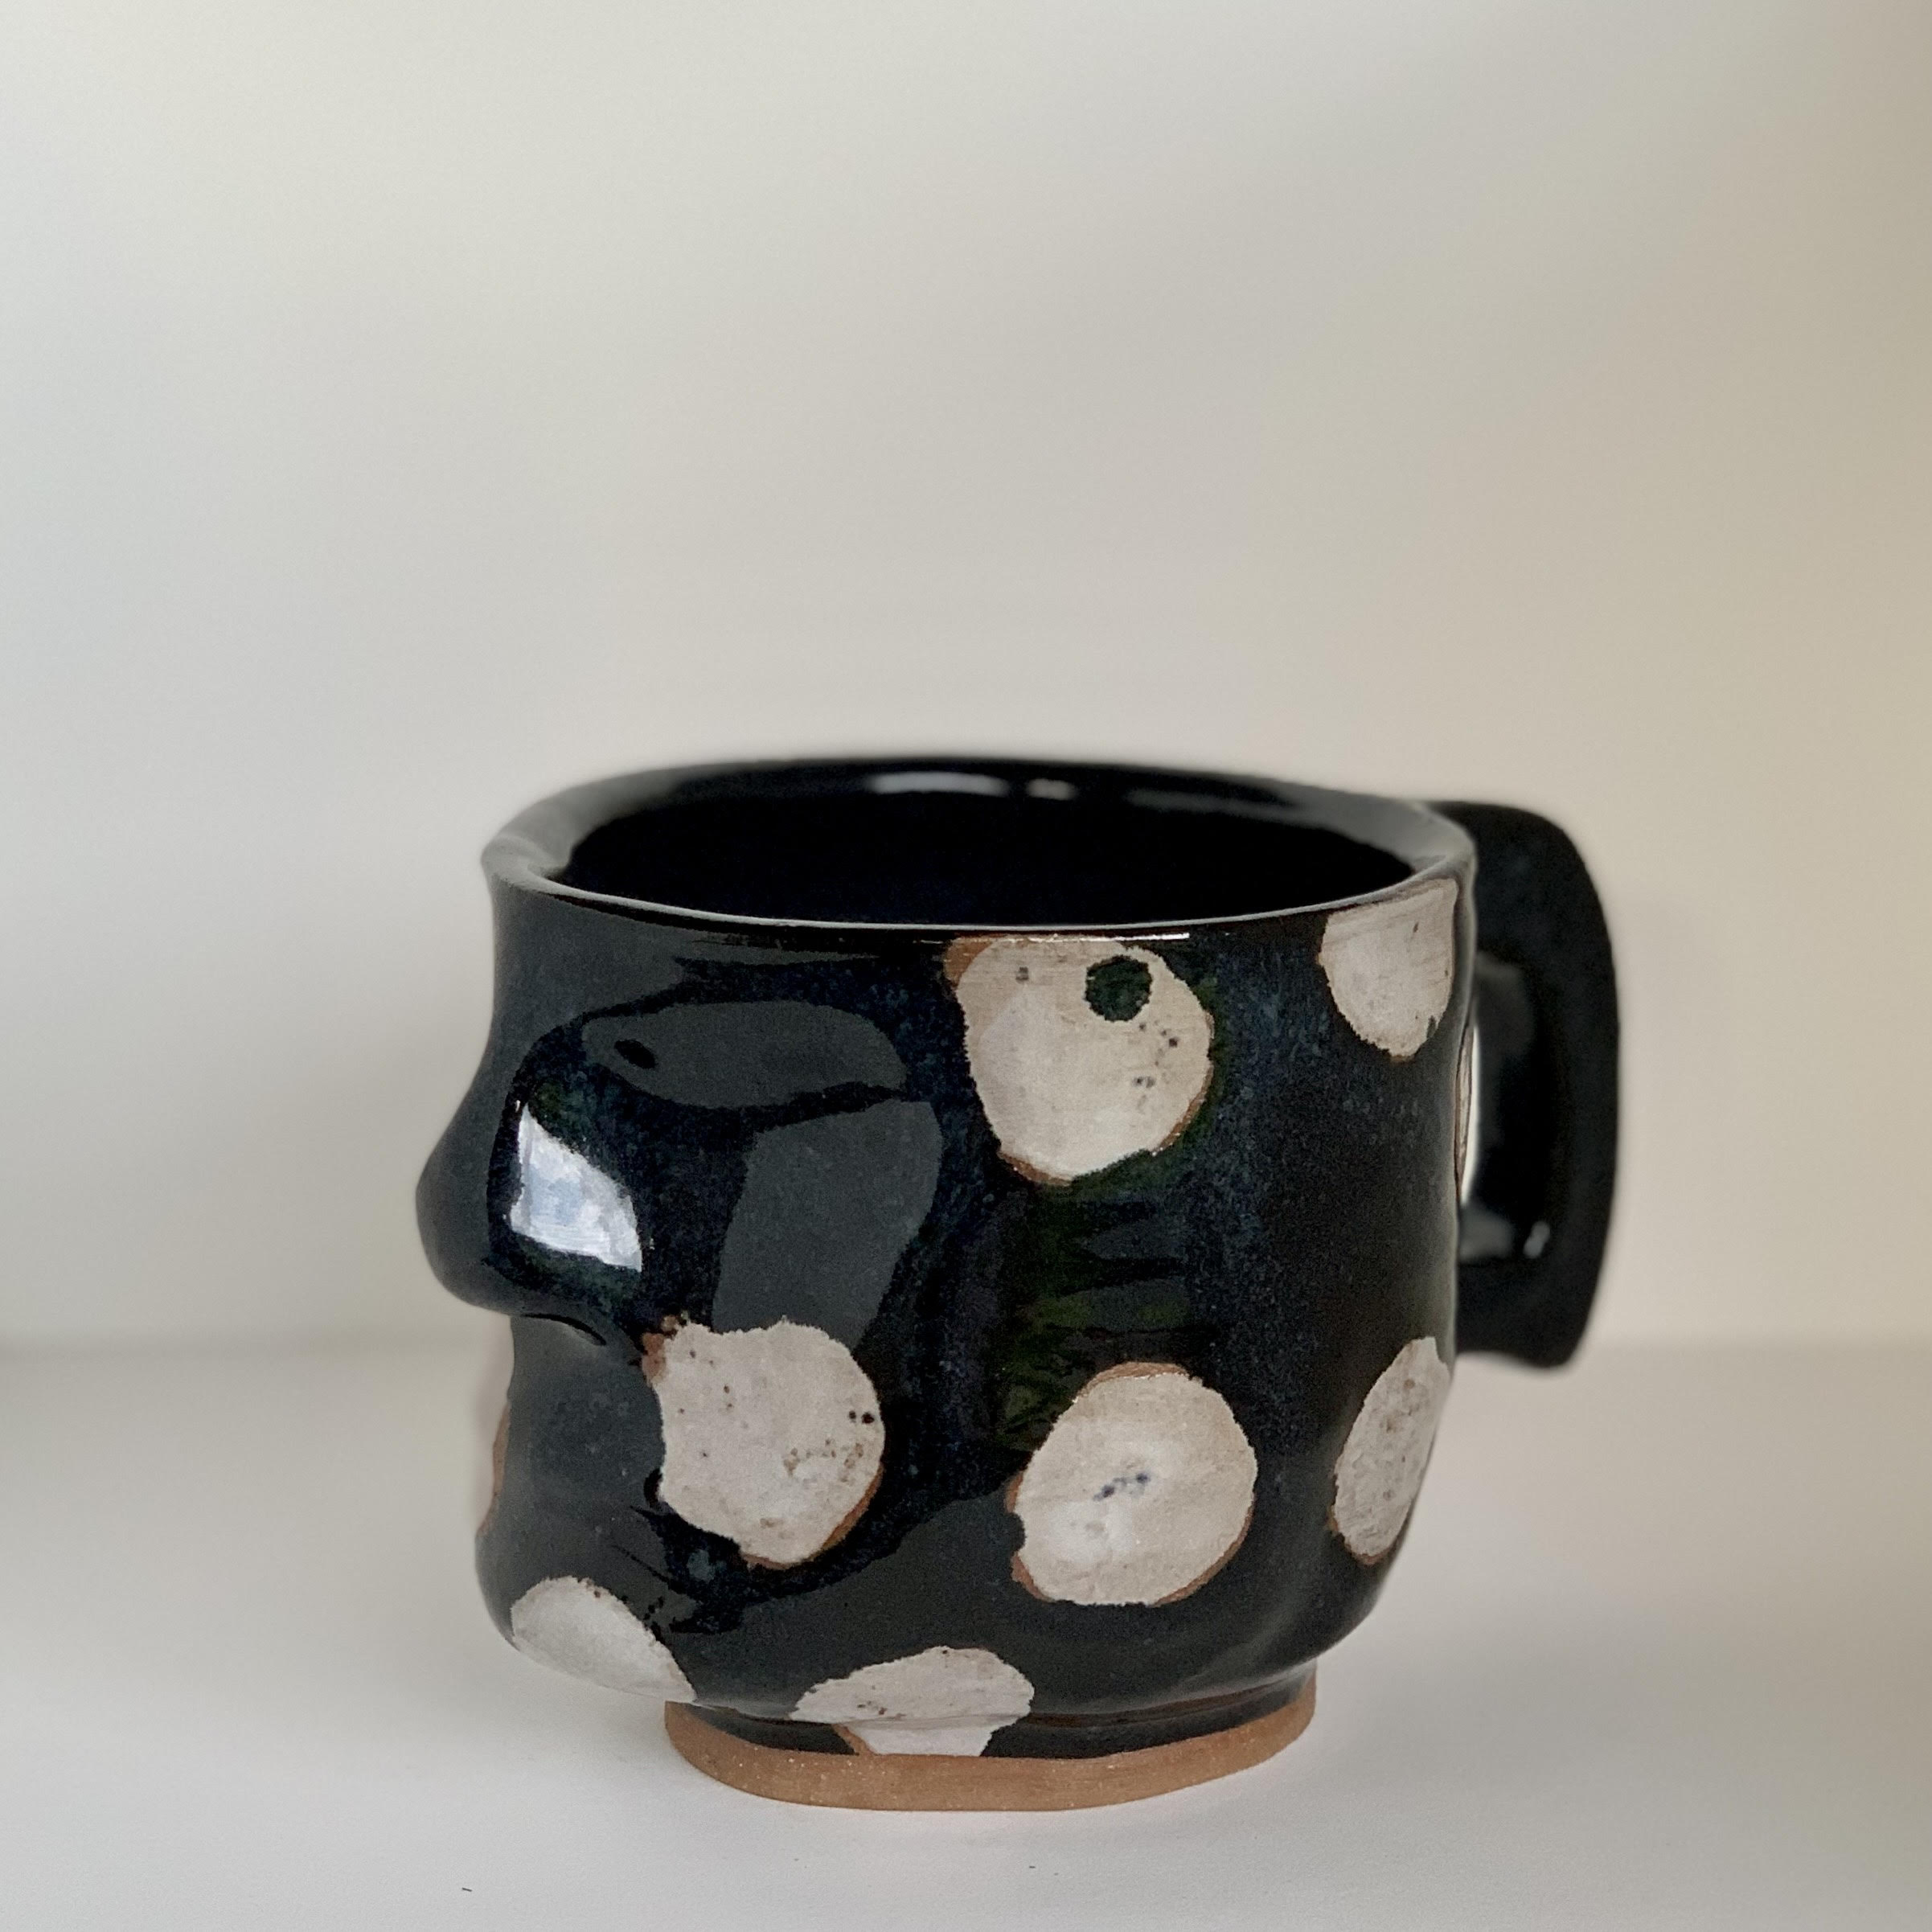 Polka Dot Mug with White on Black Glaze